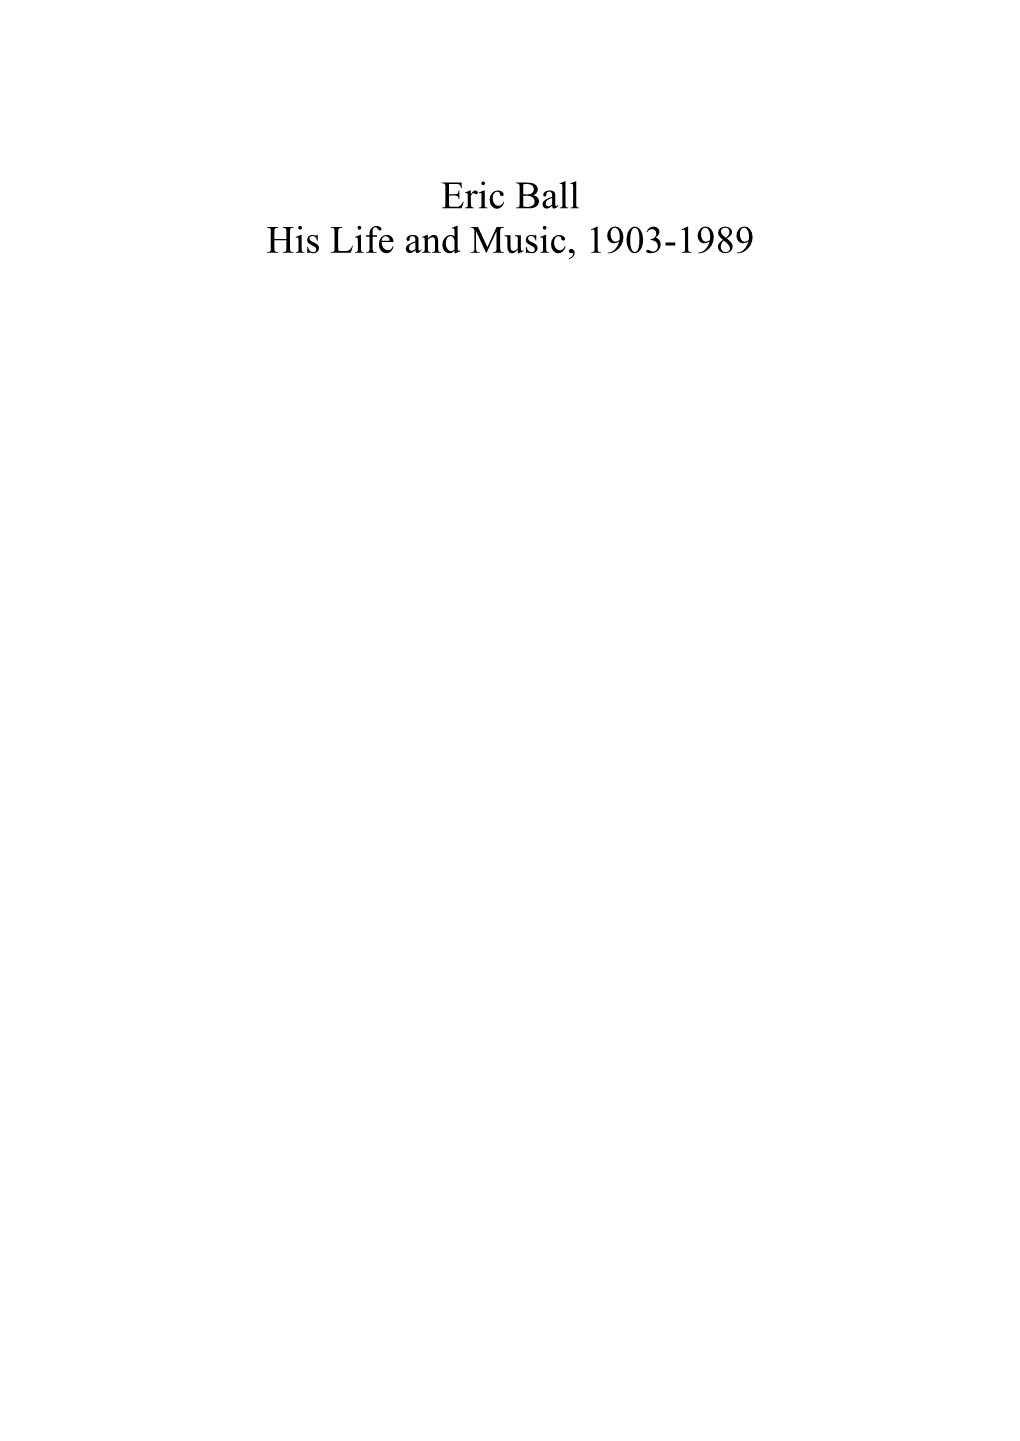 Eric Ball His Life and Music, 1903-1989